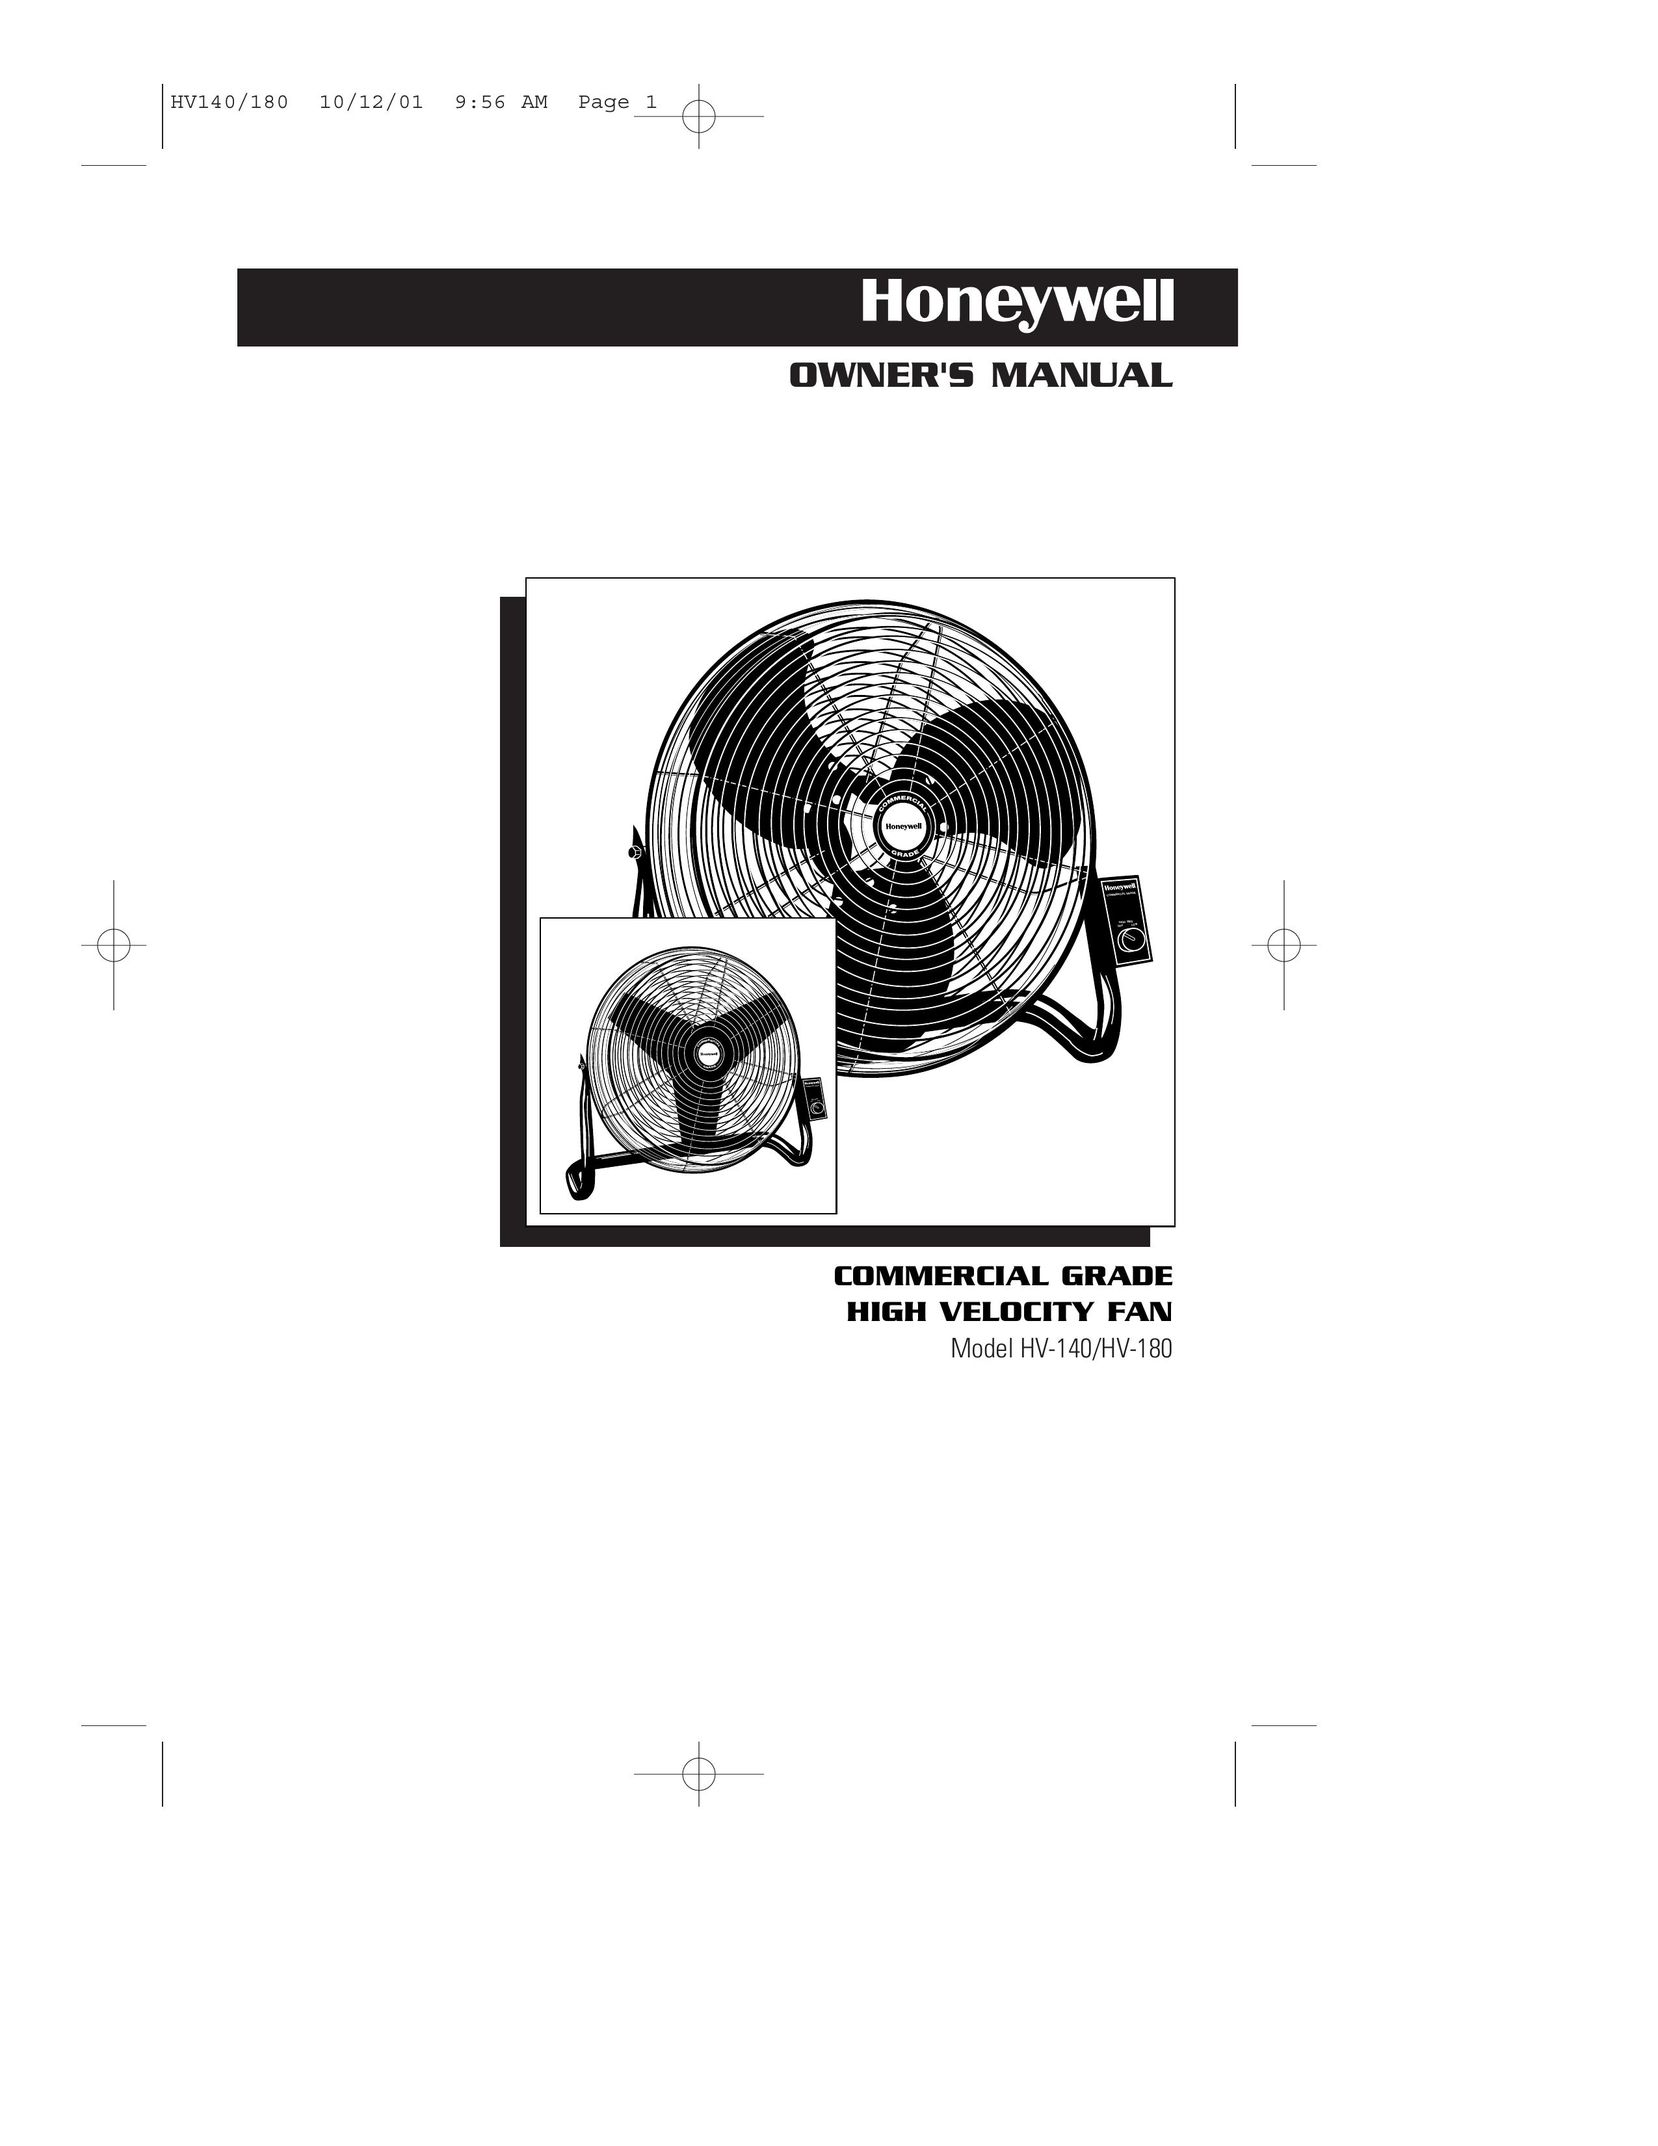 Honeywell HV140 Fan User Manual